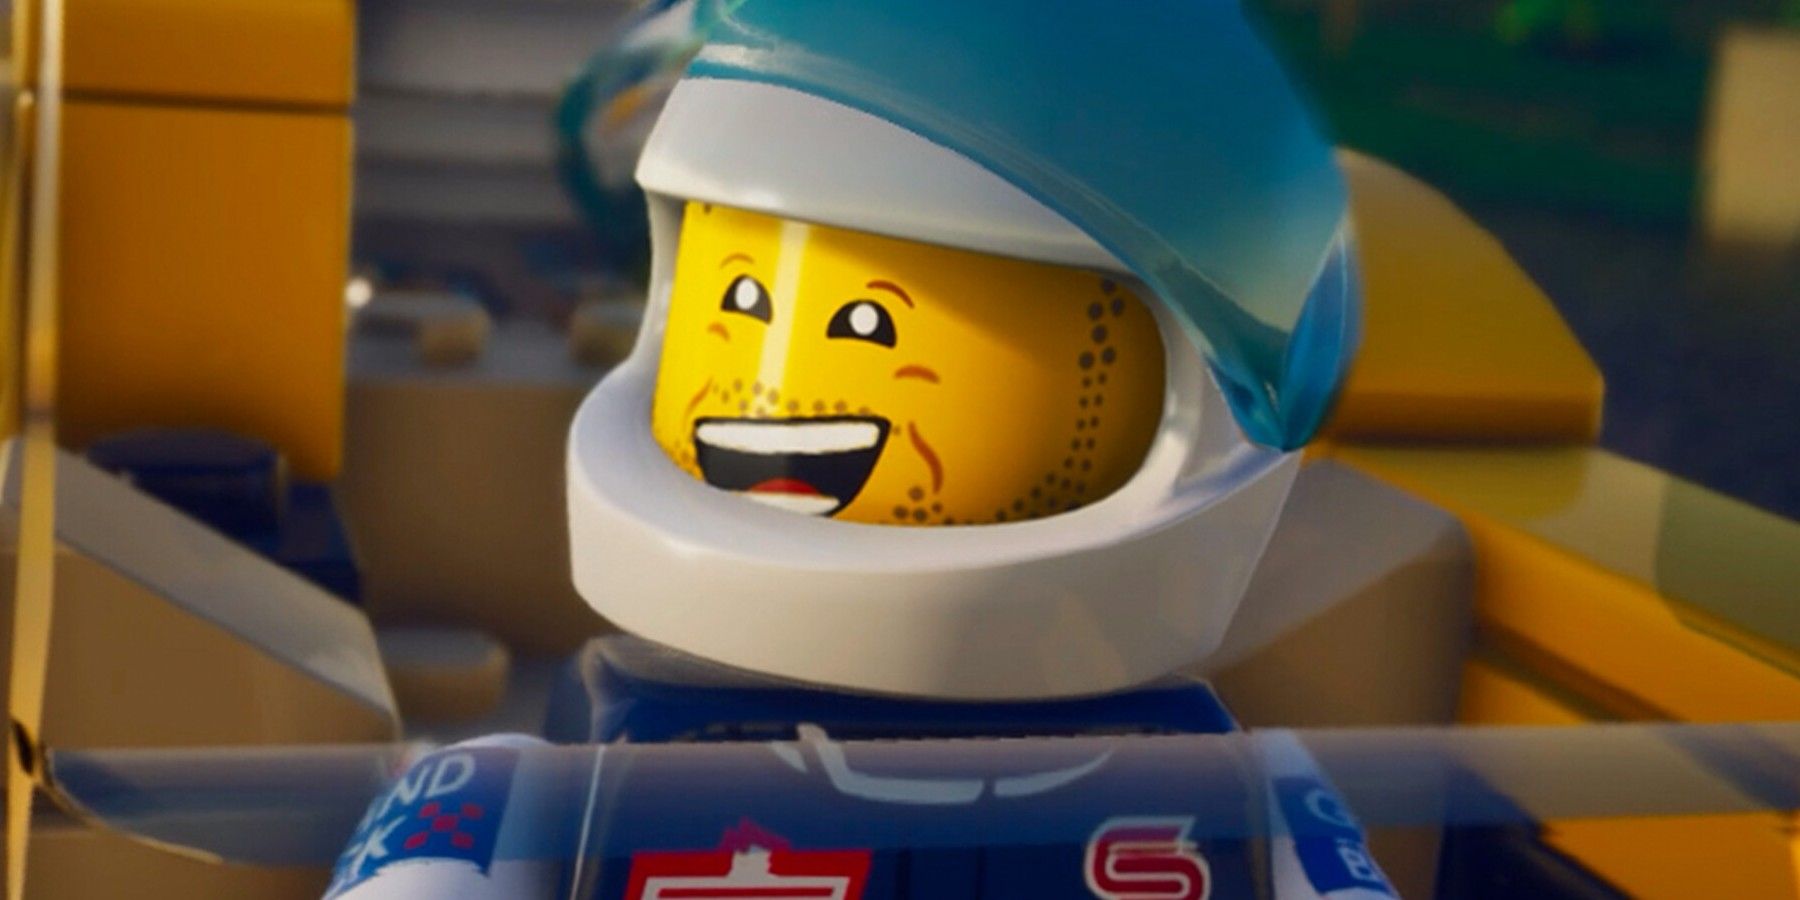 Lego 2K Drive Character 